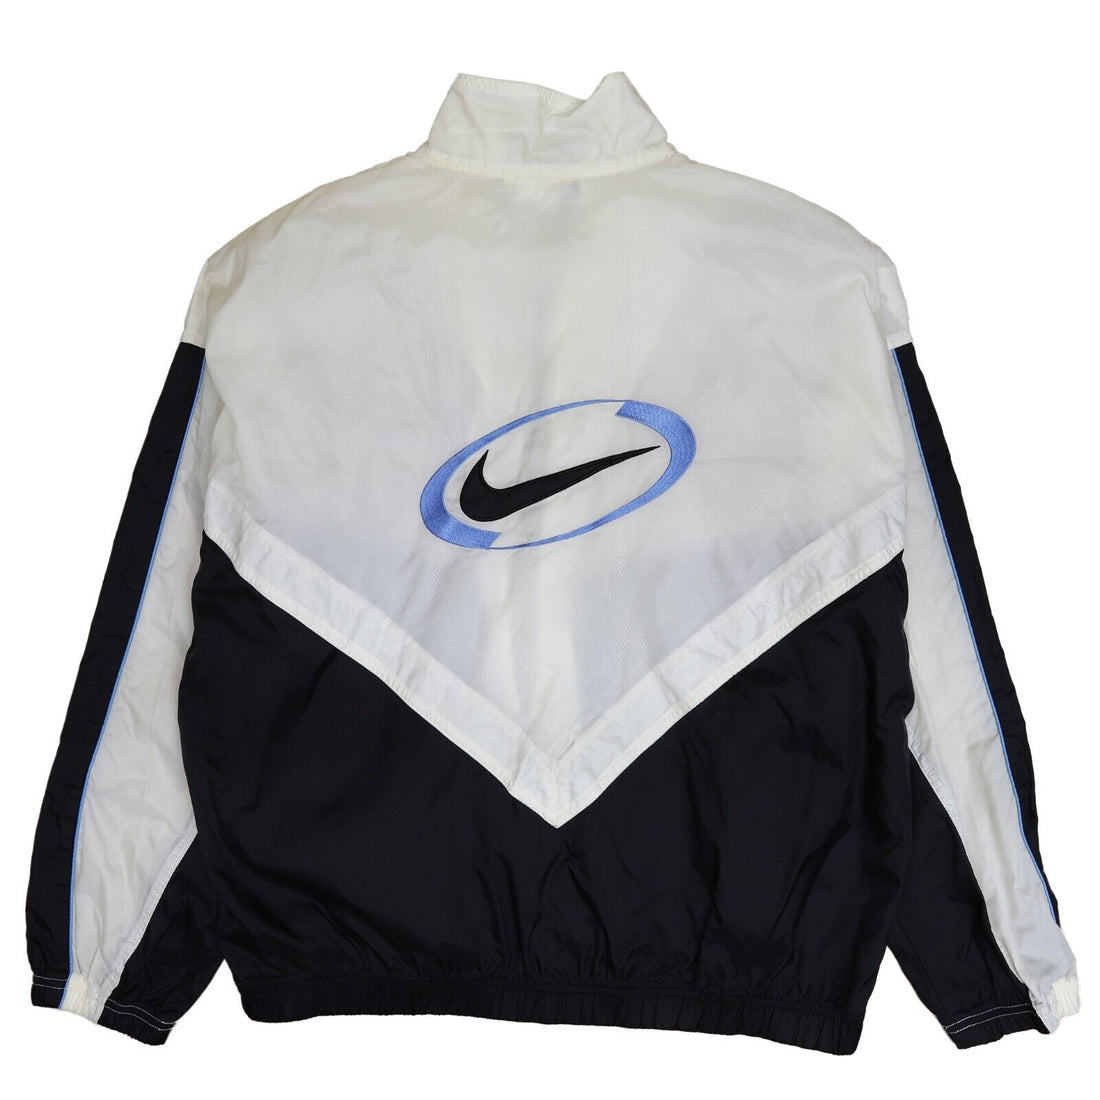 Vintage Nike Windbreaker Light Jacket Size Medium White Embroidered